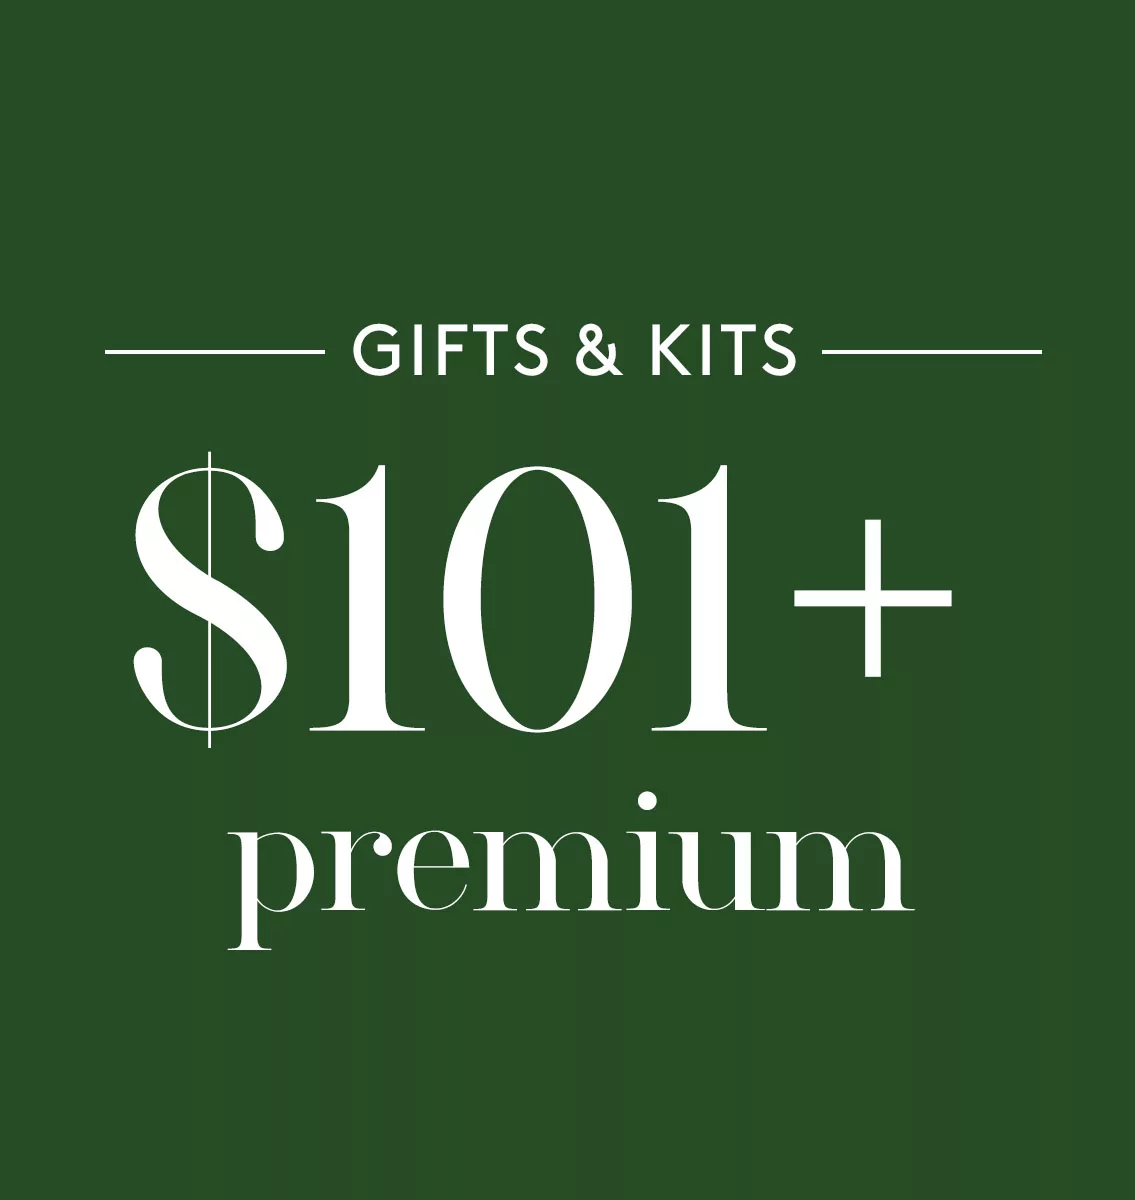 Premium Gifts, $100+